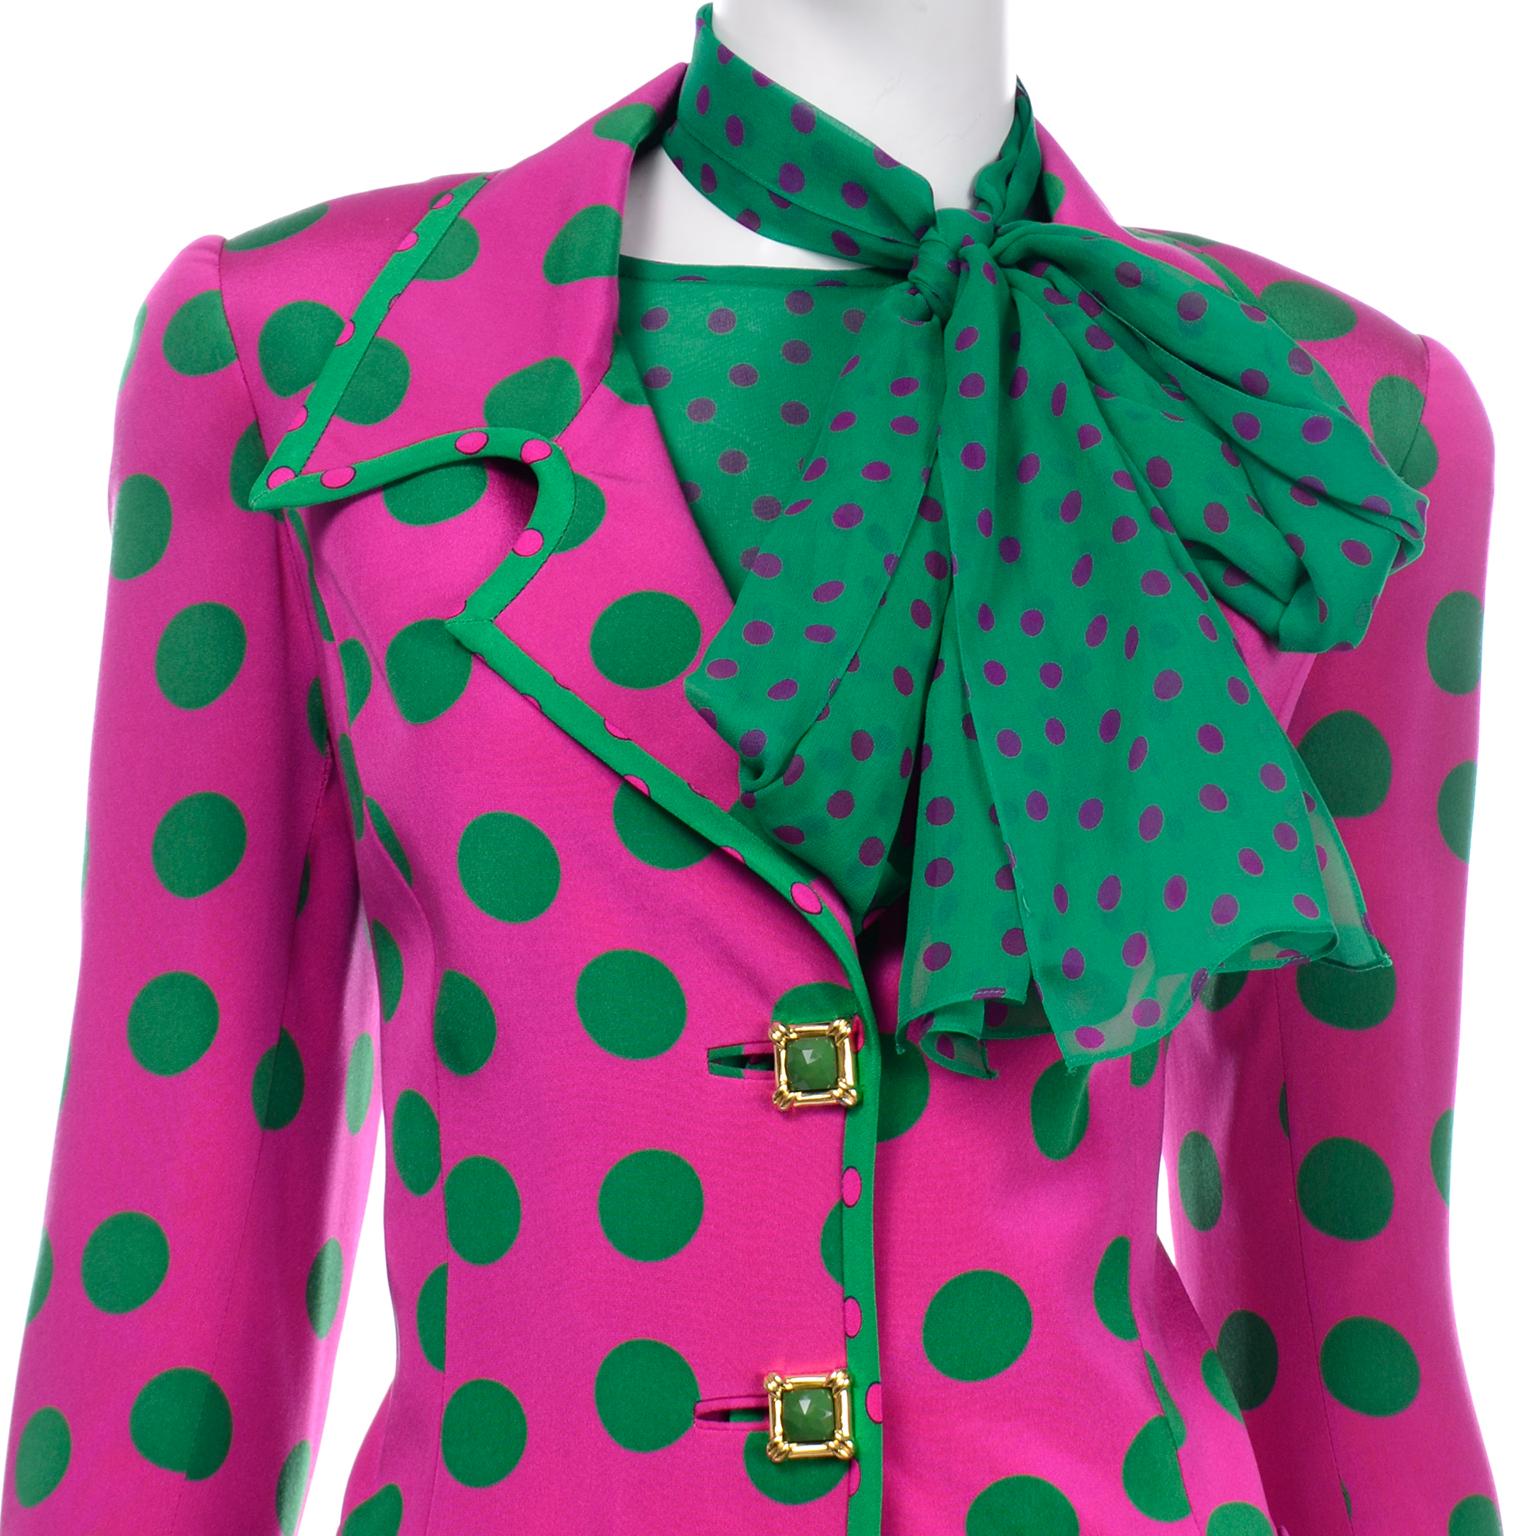 David Hayes Vintage Silk Pink & Green Polka Dot Skirt Jacket & Blouse Suit $1670 2